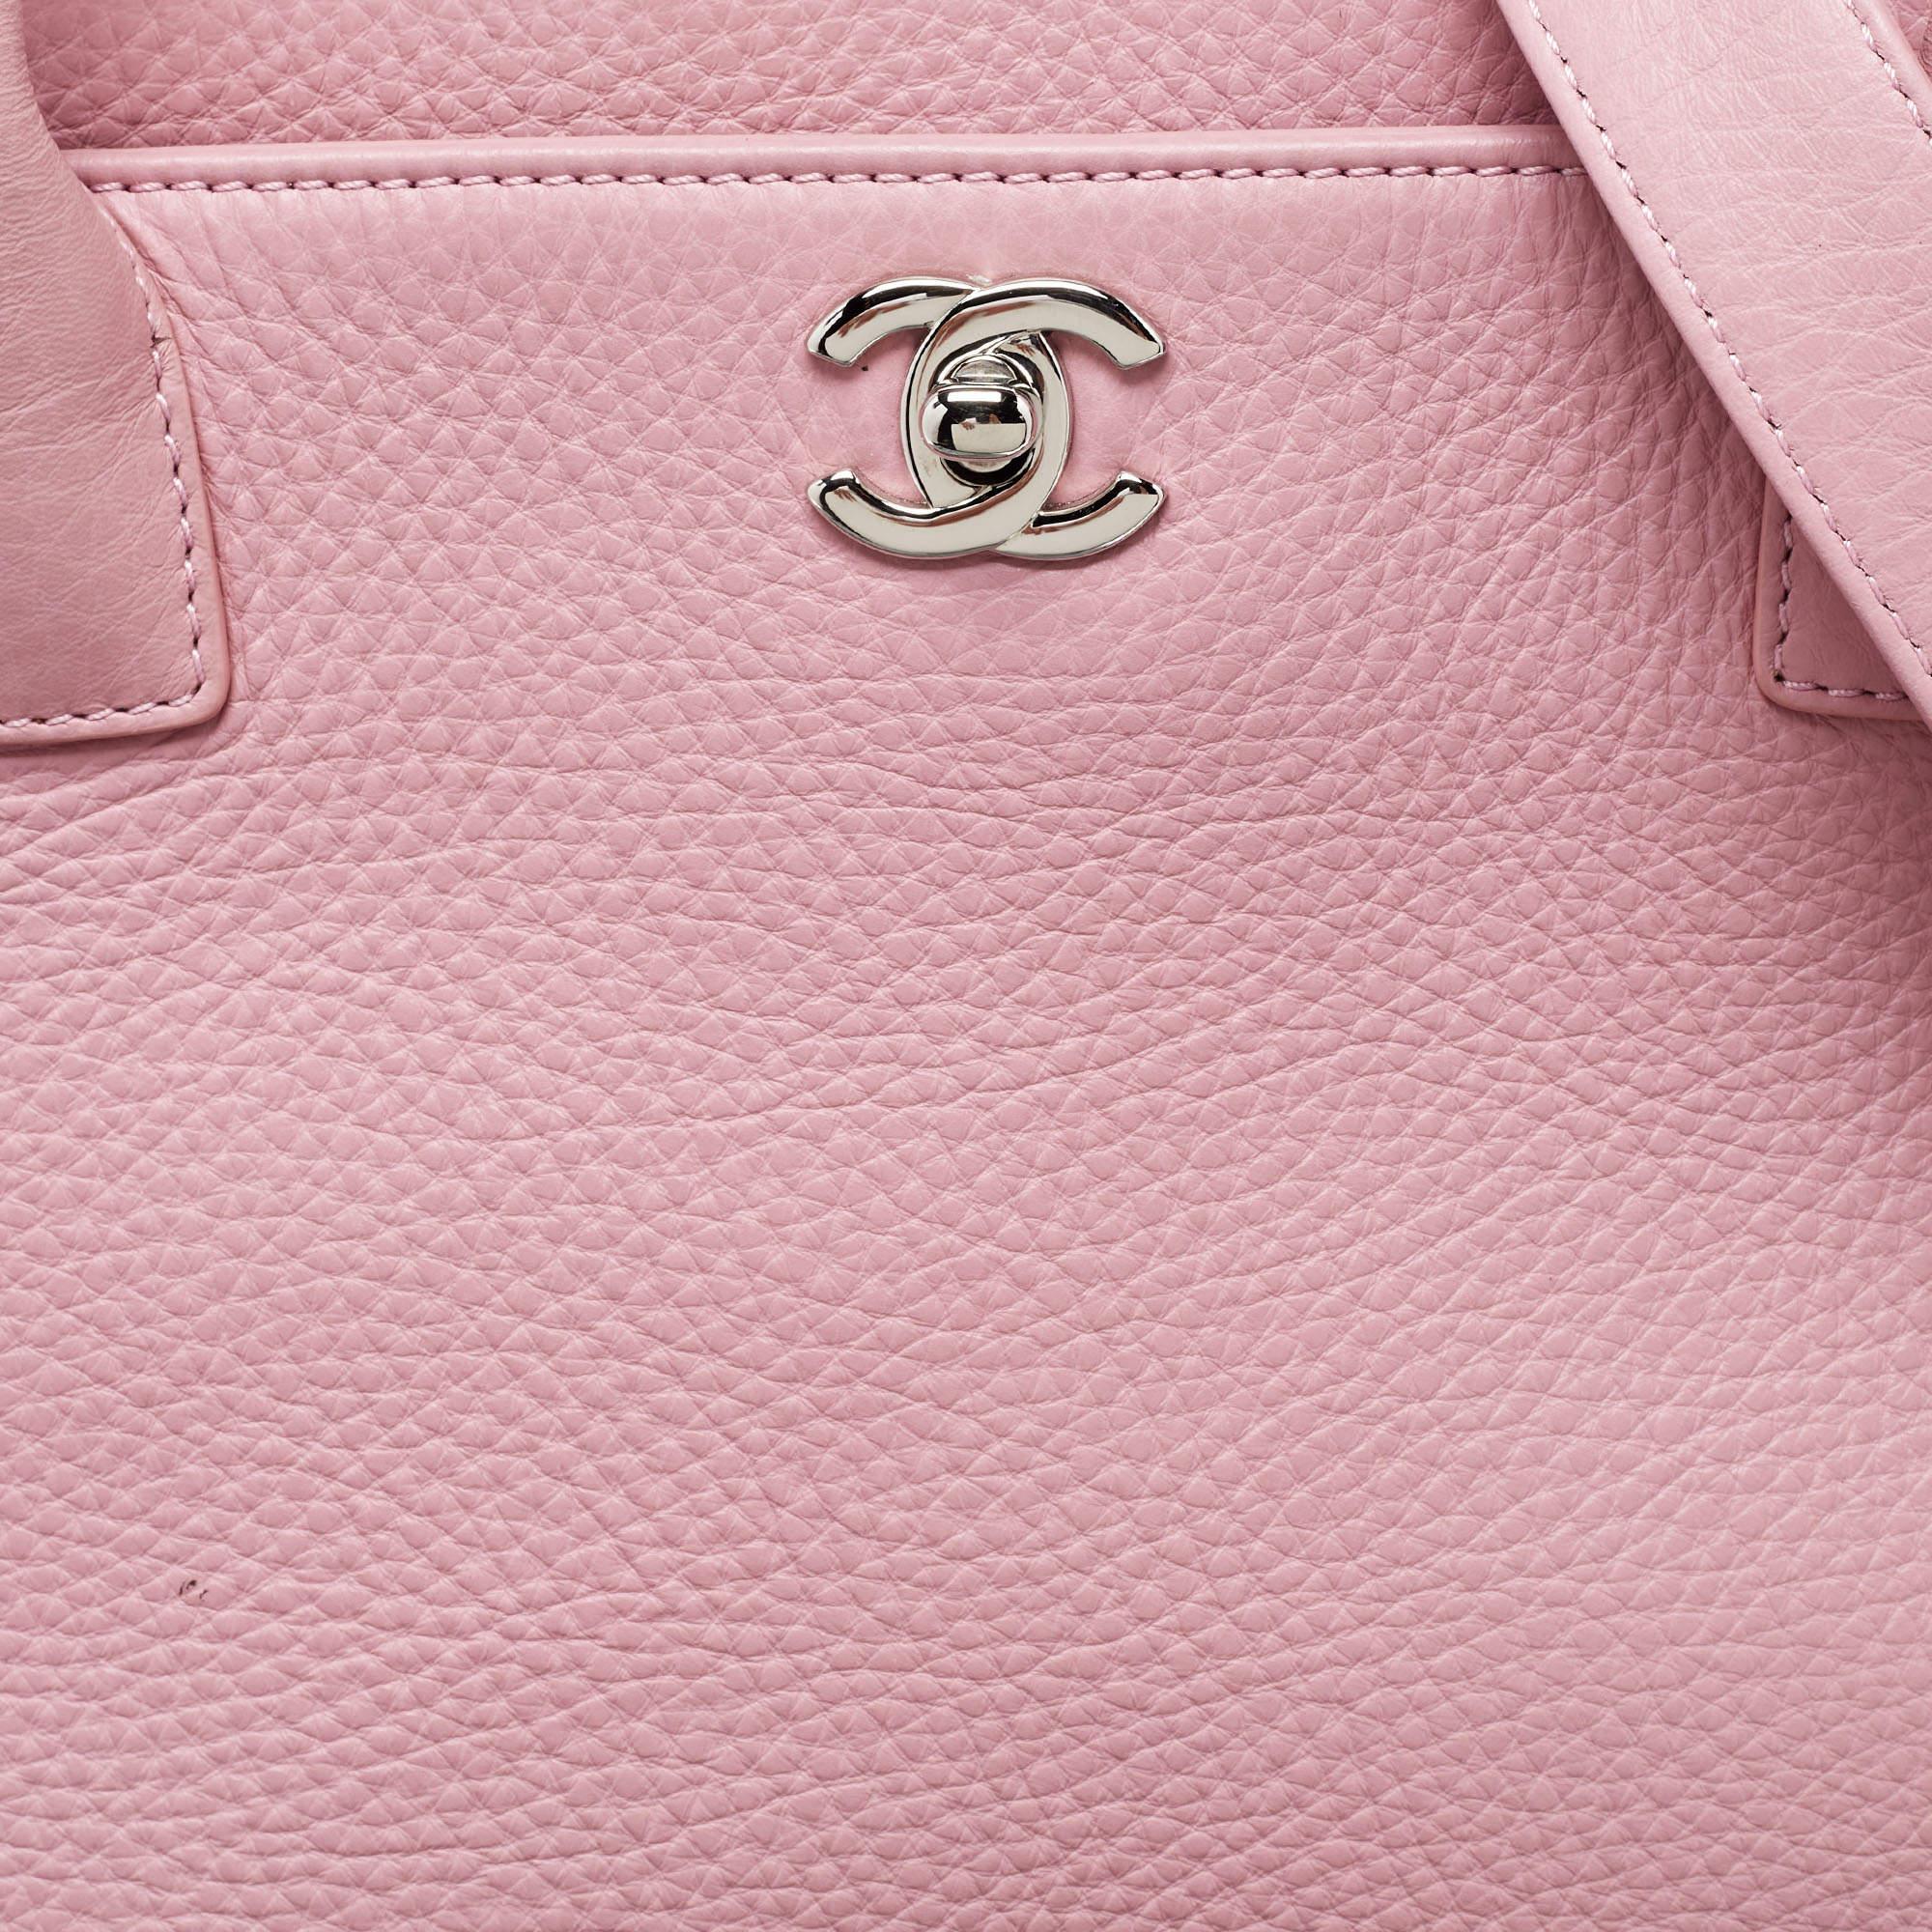 Chanel - Fourre-tout exécutif en cuir rose 5